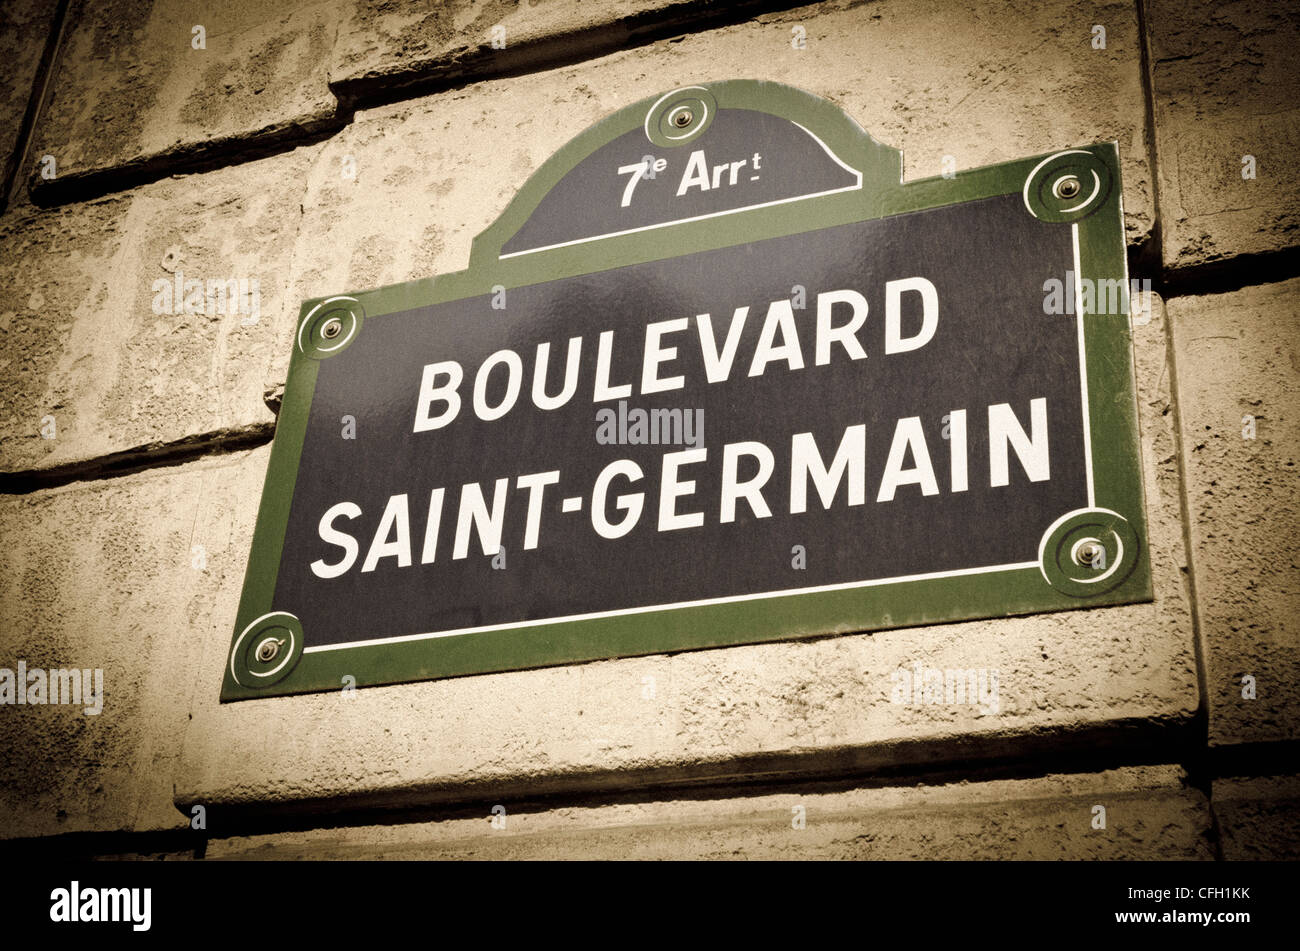 Boulevard Saint-Germain street sign, Paris, France Stock Photo